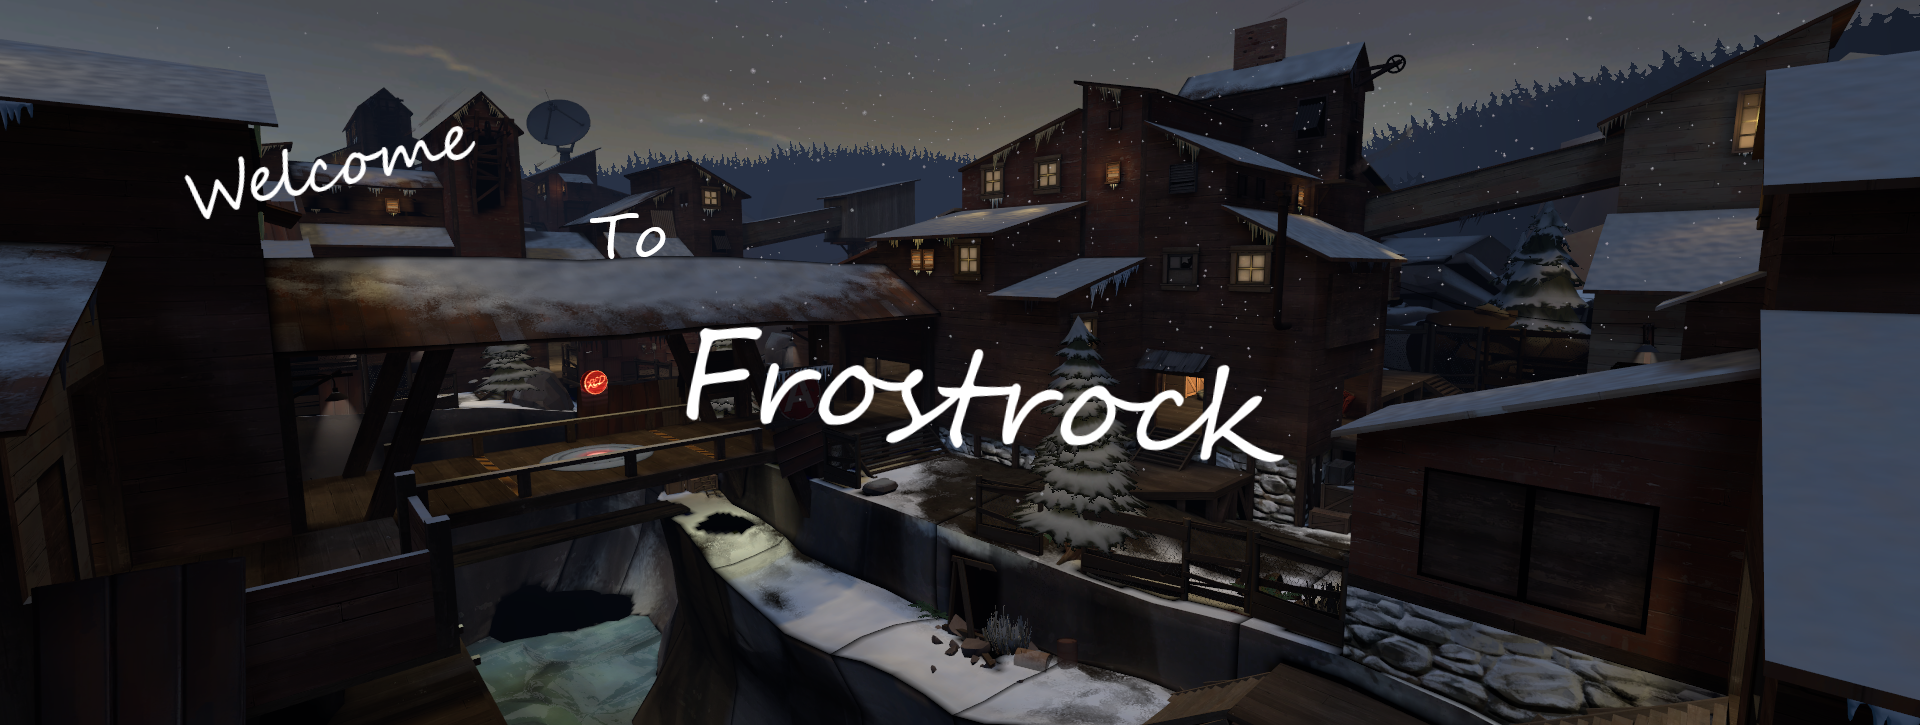 Frostrock.png